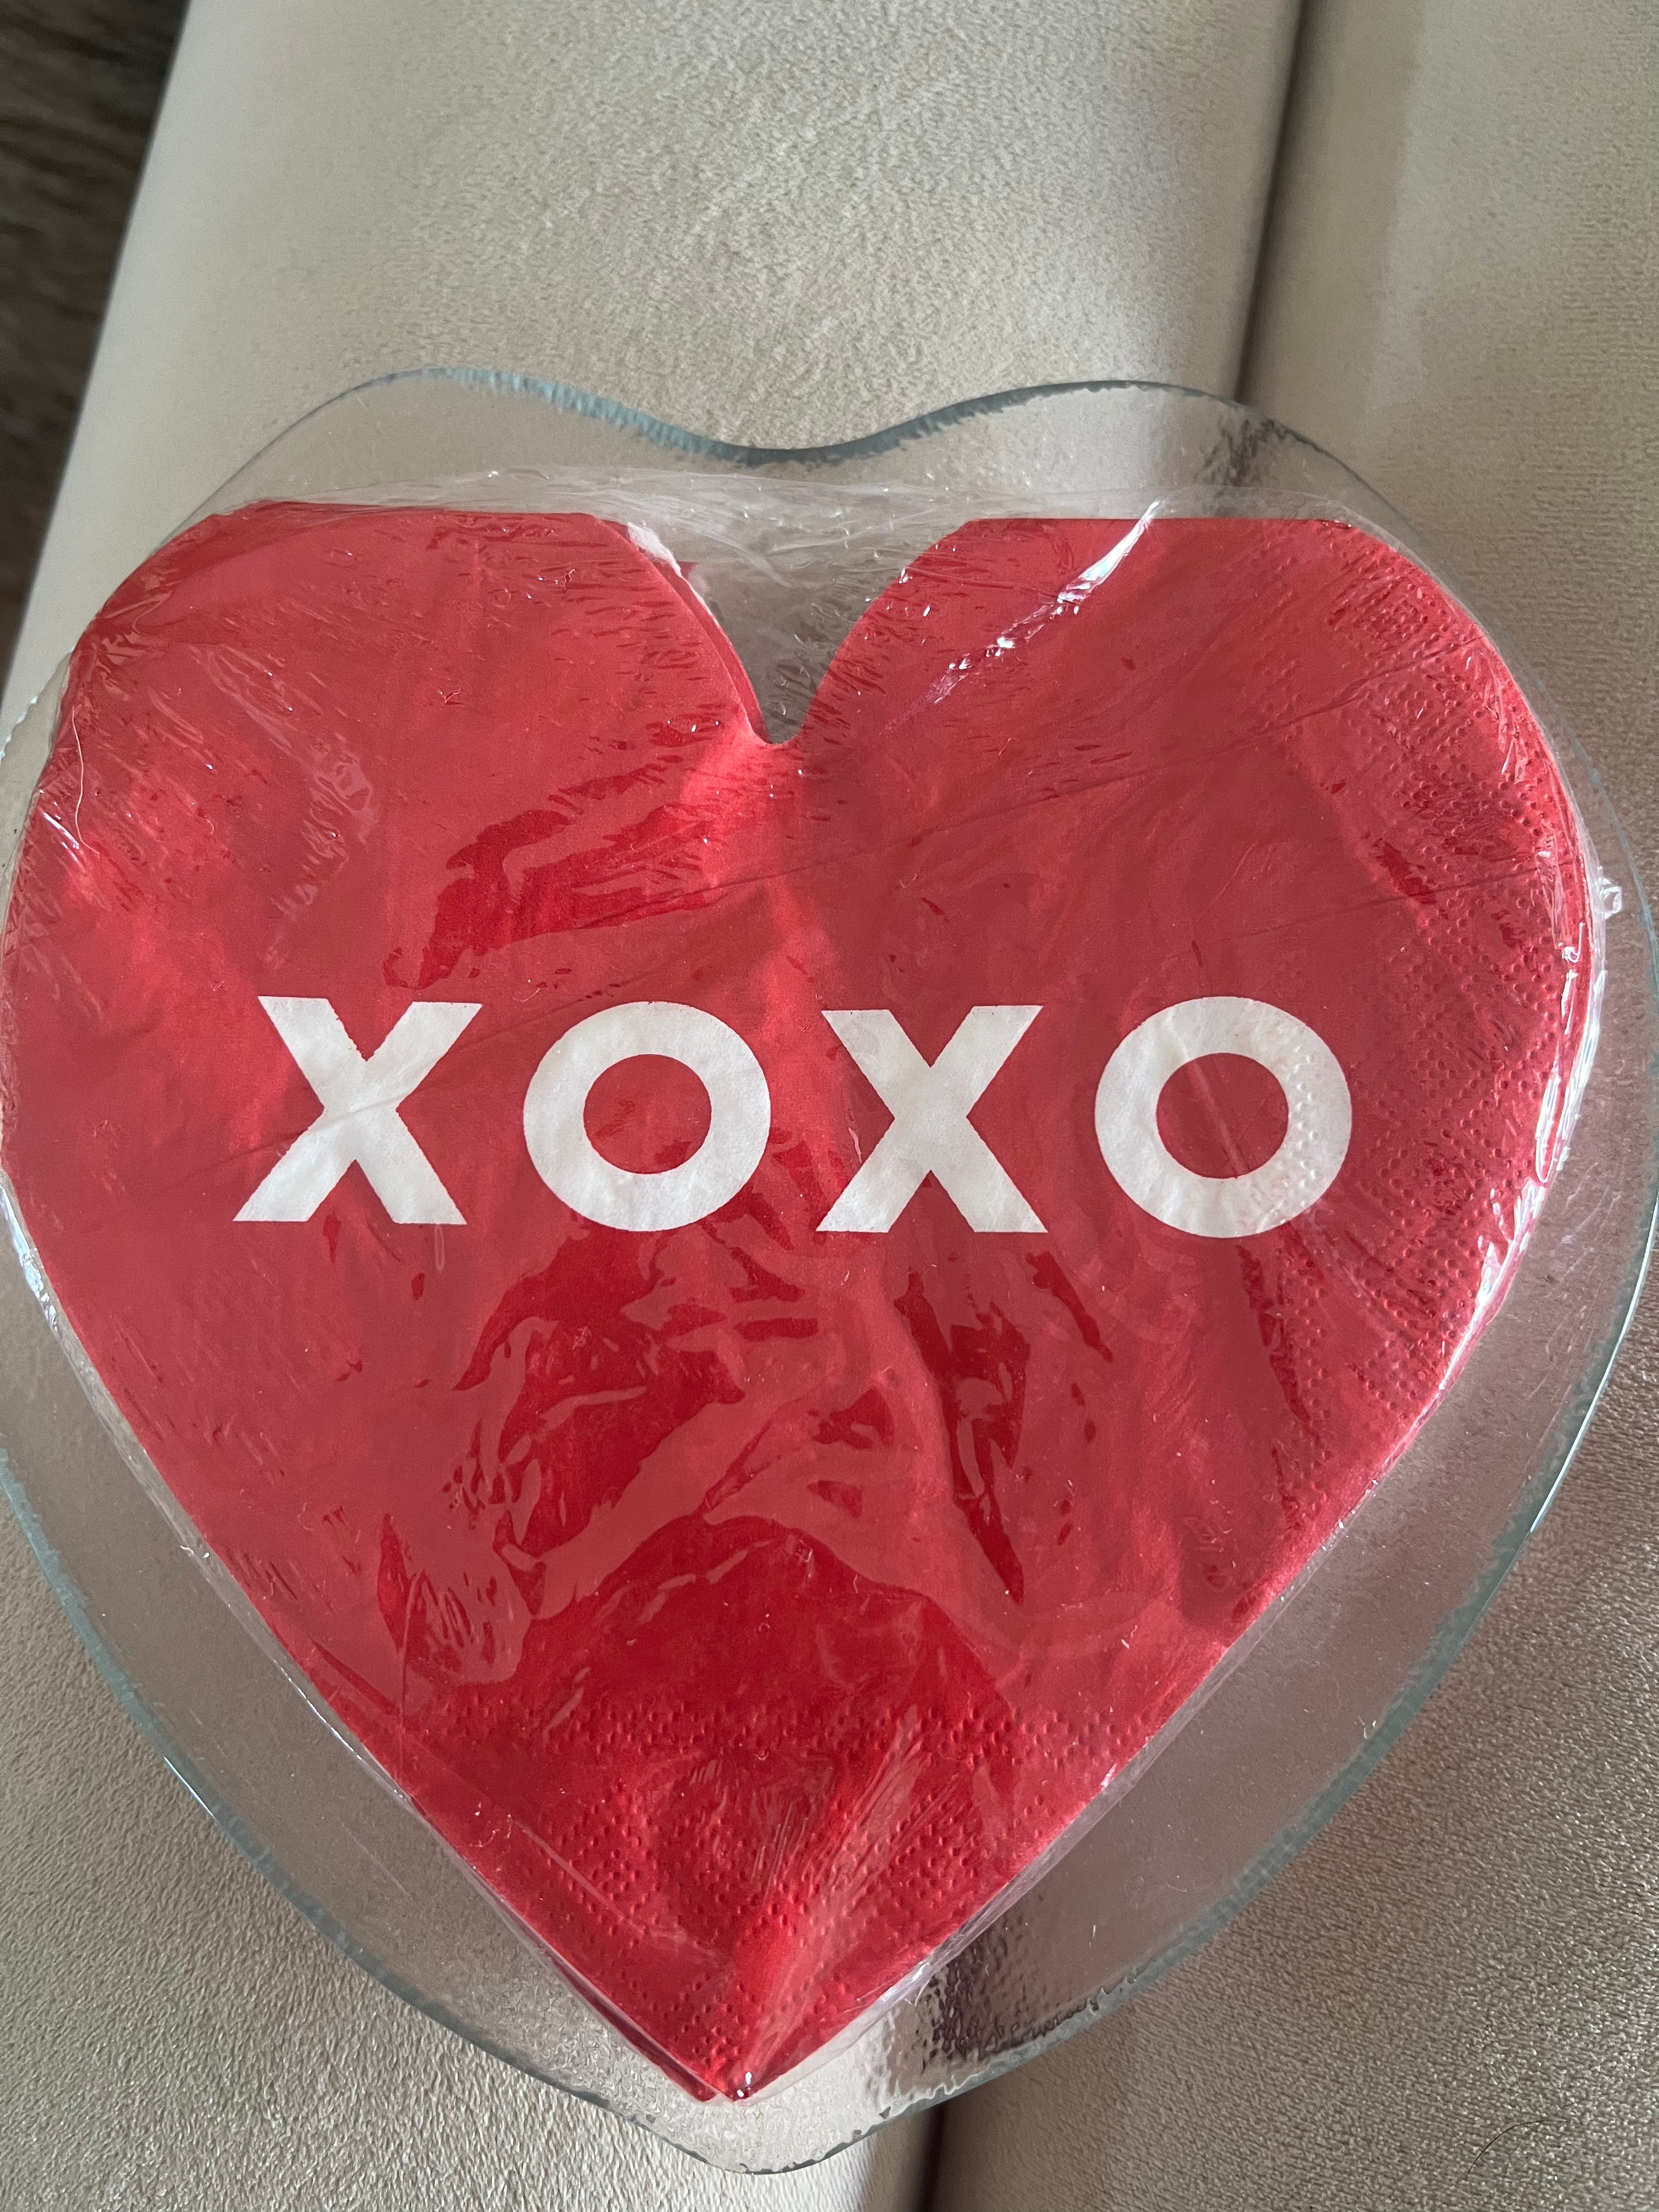 Heart plate with heart xoxo napkins